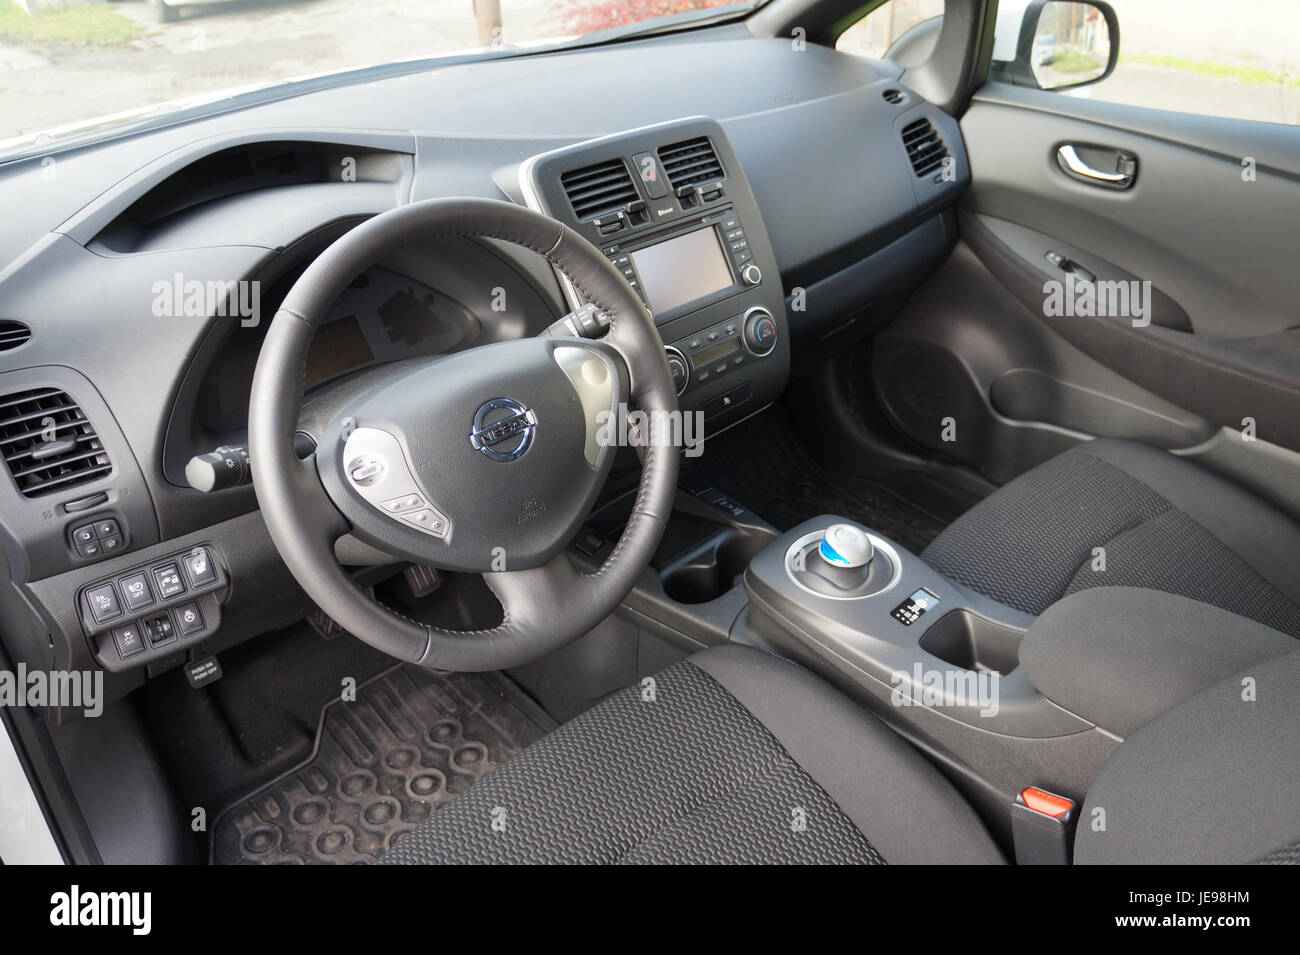 2013 Nissan Leaf Interior Stock Photo 146492464 Alamy